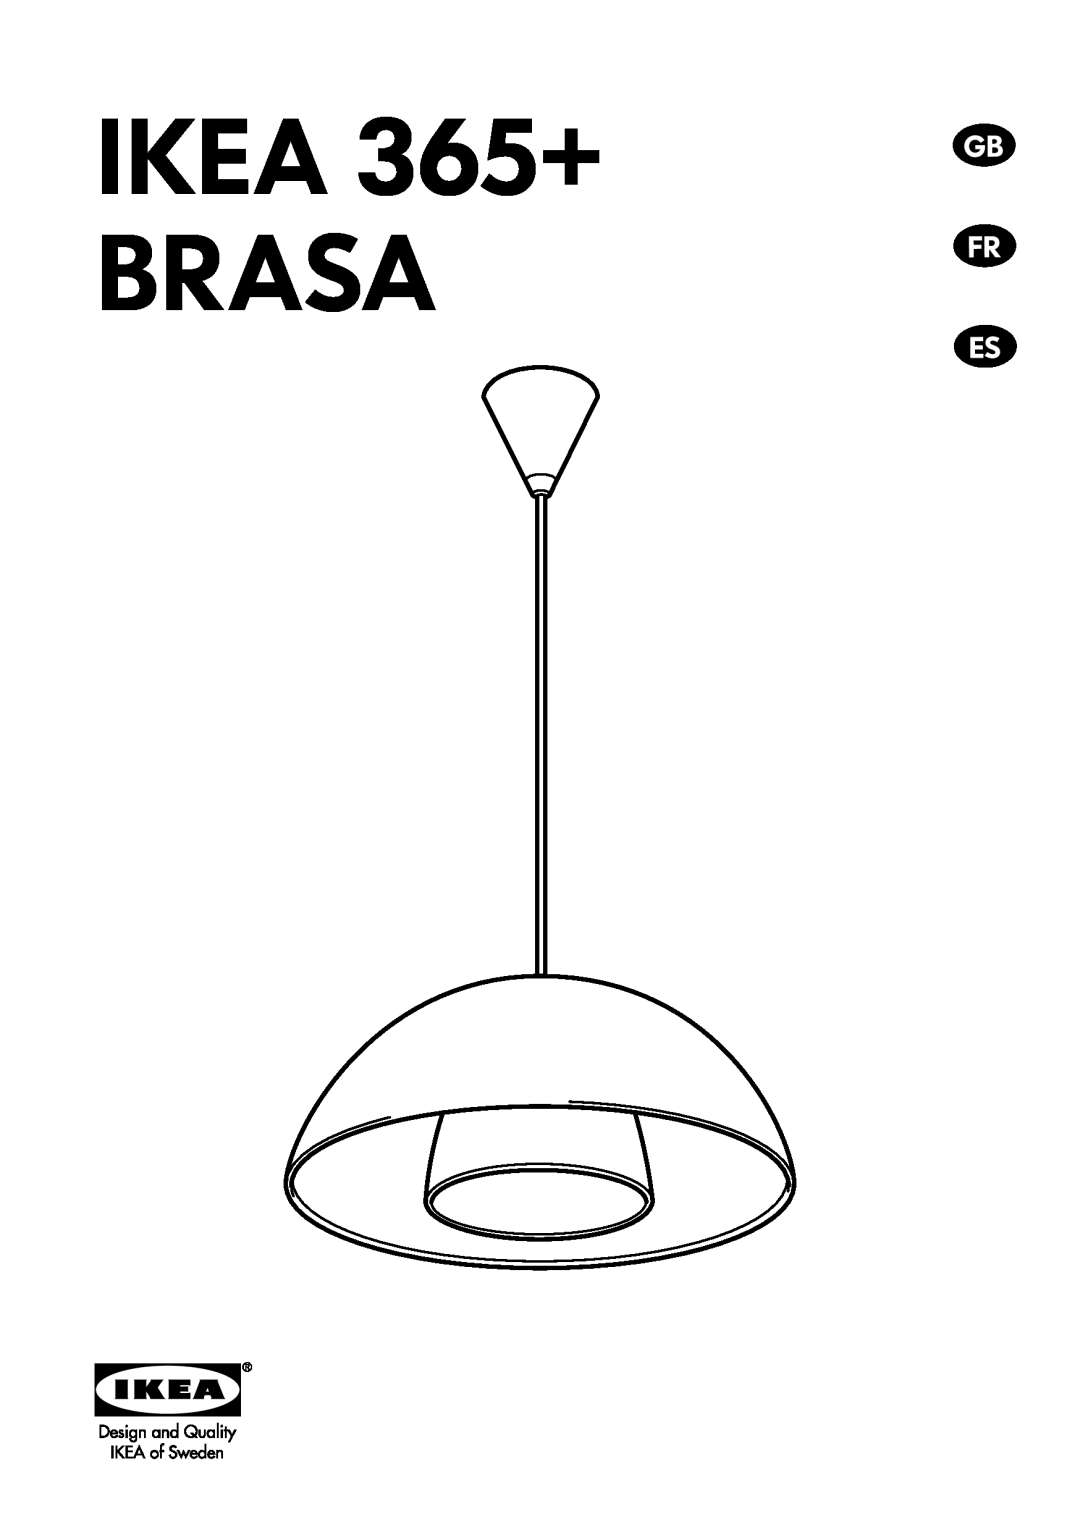 IKEA AA-322649-2 manual IKEA 365+ BRASA 